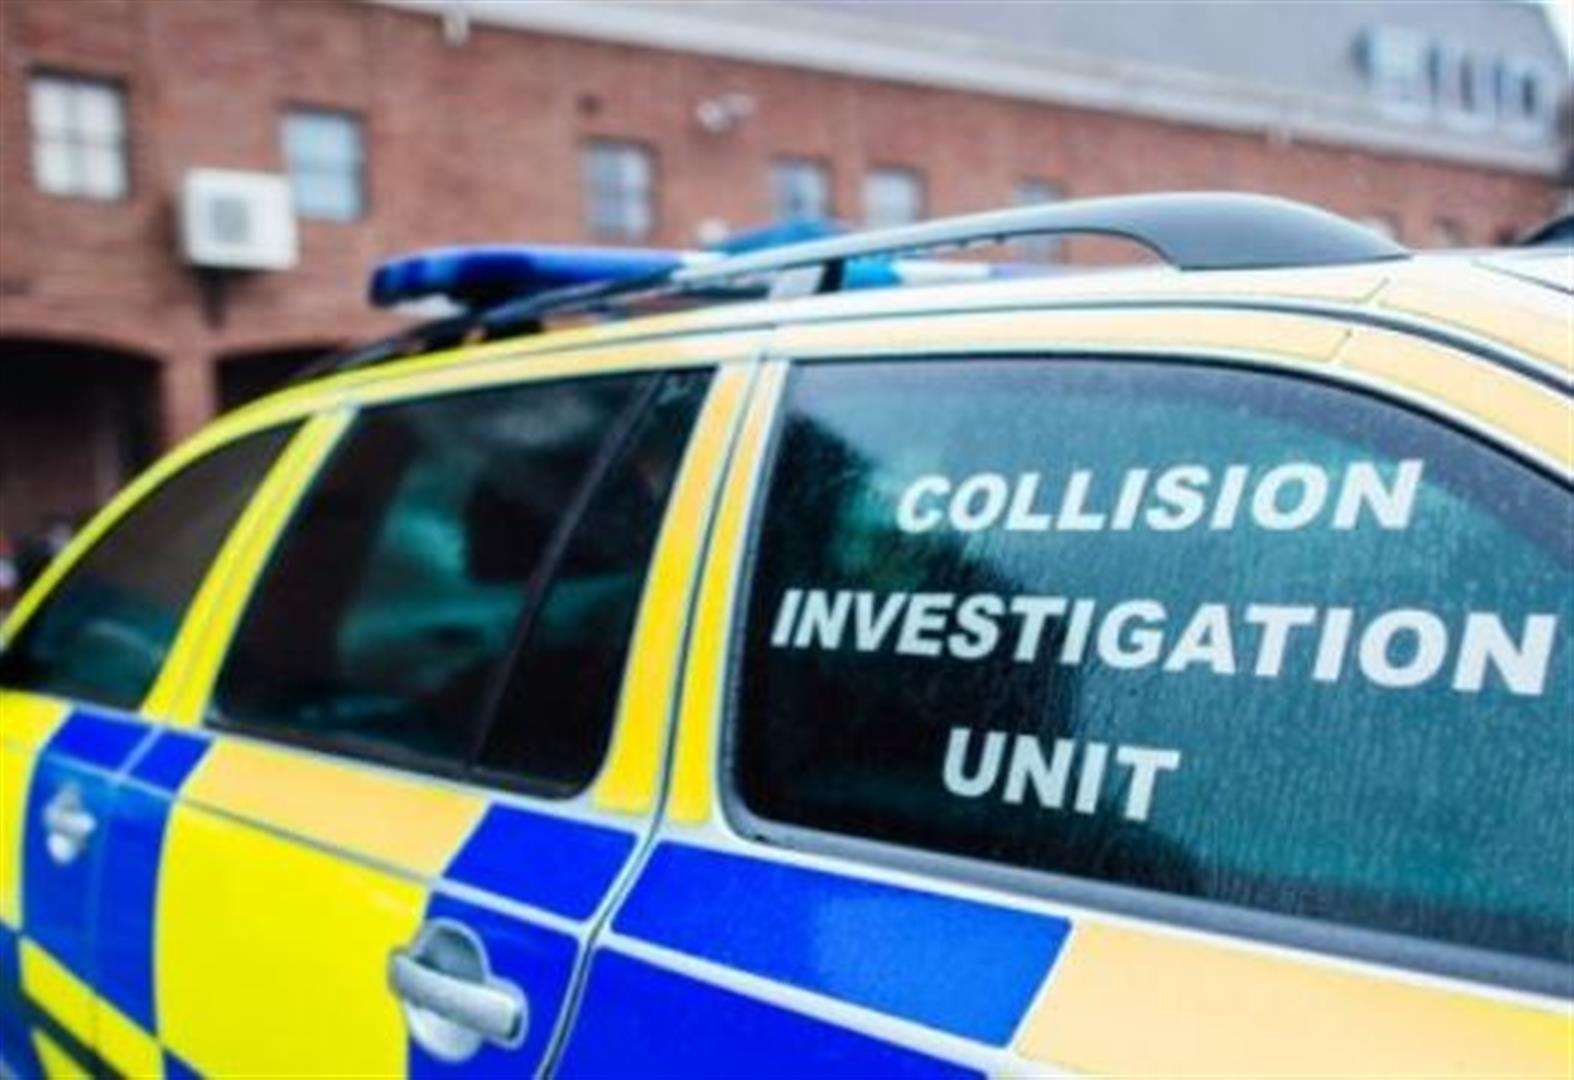 Kent Police collision investigation unit - Stock Image (2707752)